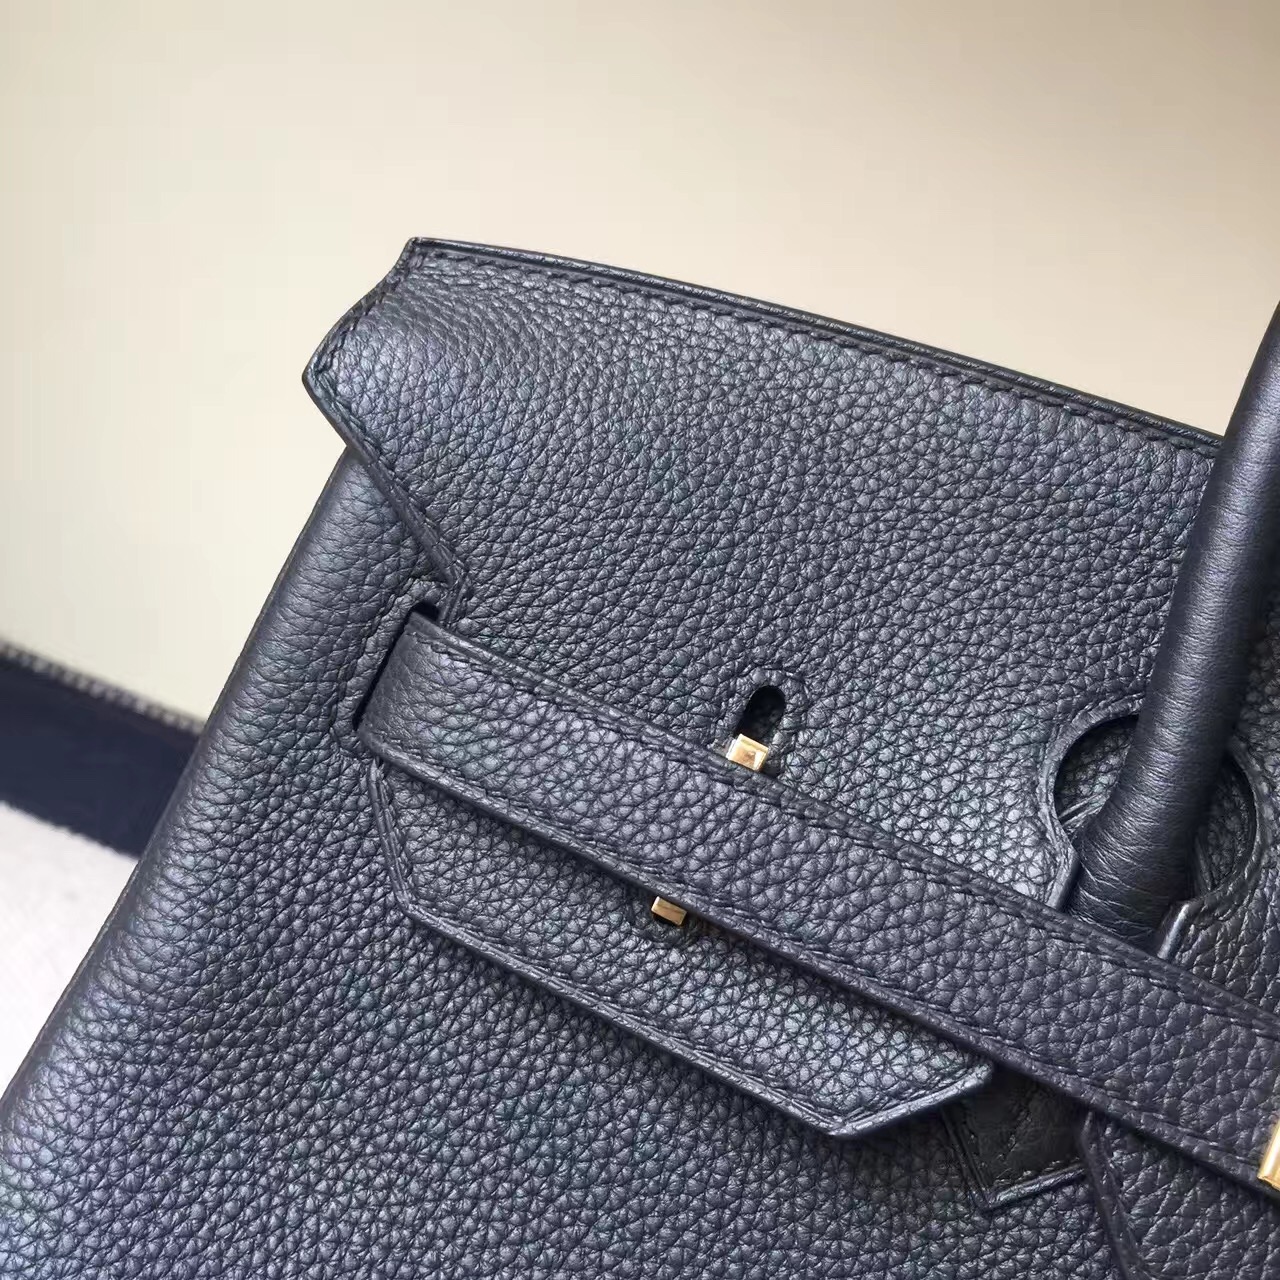 Hermes Classic Handbag Togo Calf  Leather Birkin35cm in CK89 Black